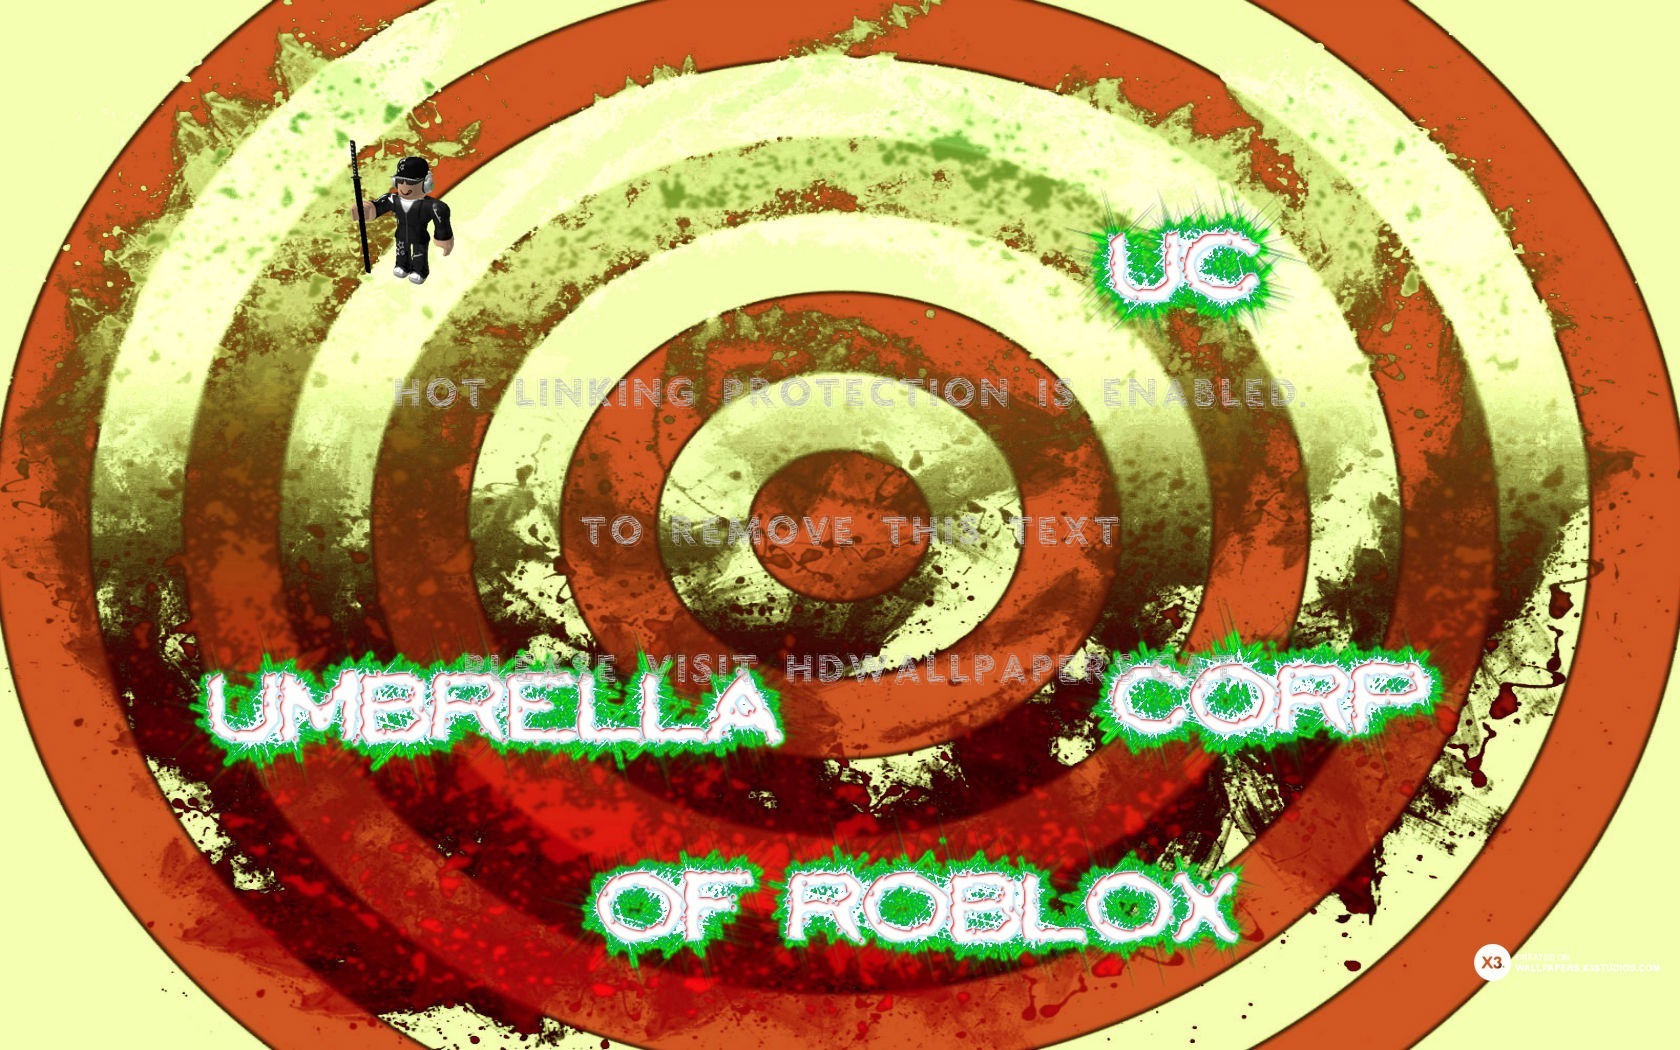 Umbrella Corp Wallpaper Umbrellacorp Roblox Group Of Friends Clipart 1680x1050 Wallpaper Teahub Io - wallpaper for roblox group